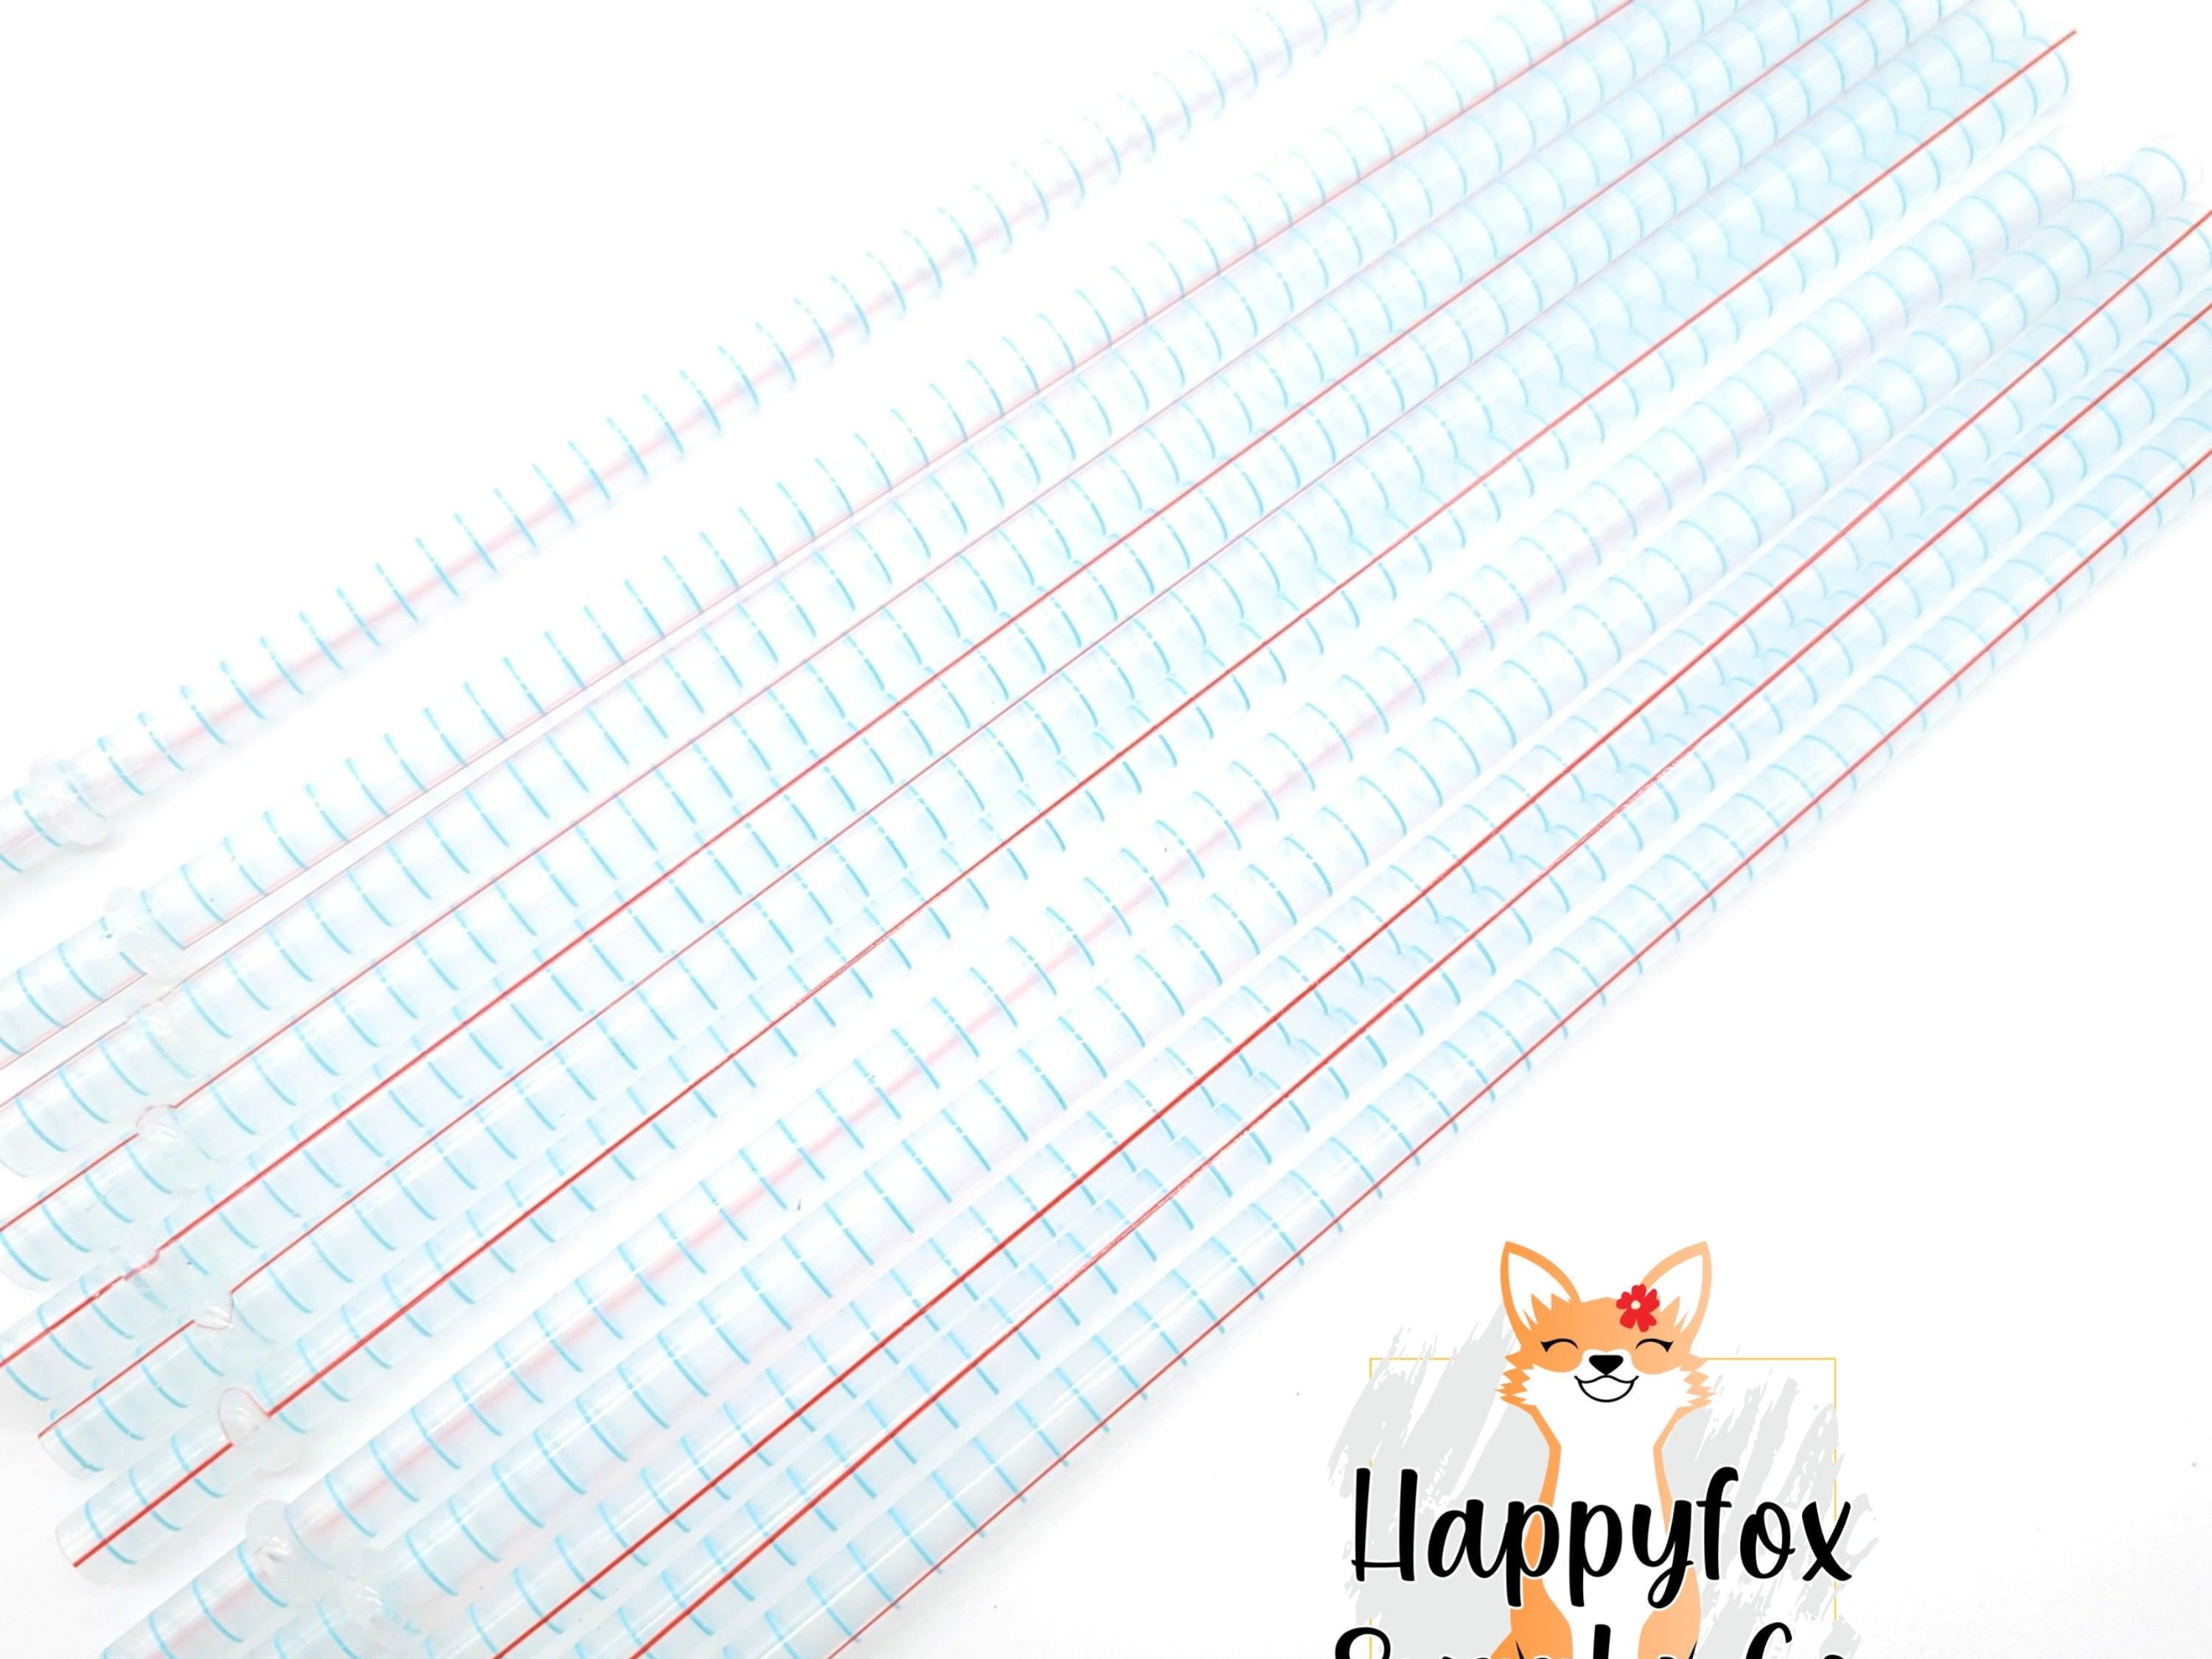 10" Reusable Plastic Lined Paper Teacher Print Straws - Happyfox Supply Co